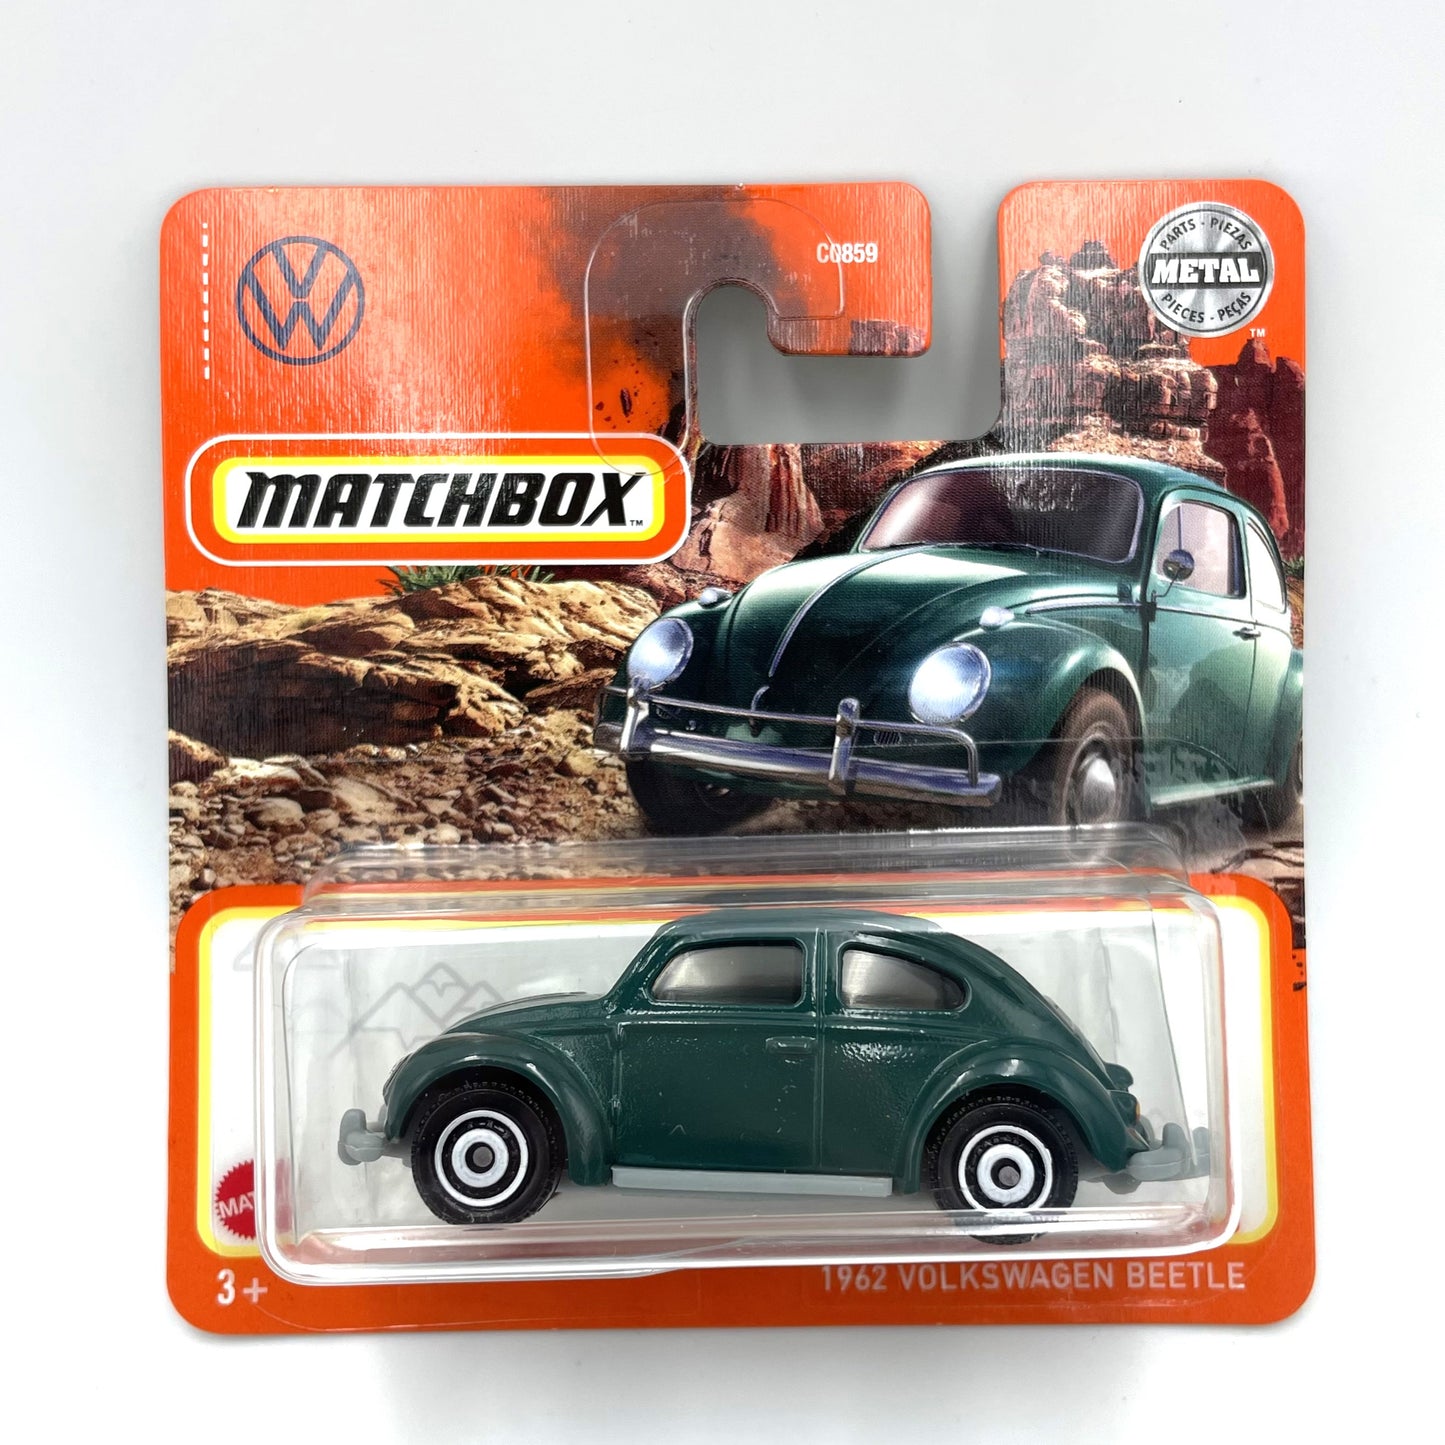 Matchbox - 1962 Volkswagen Beetle Short Card